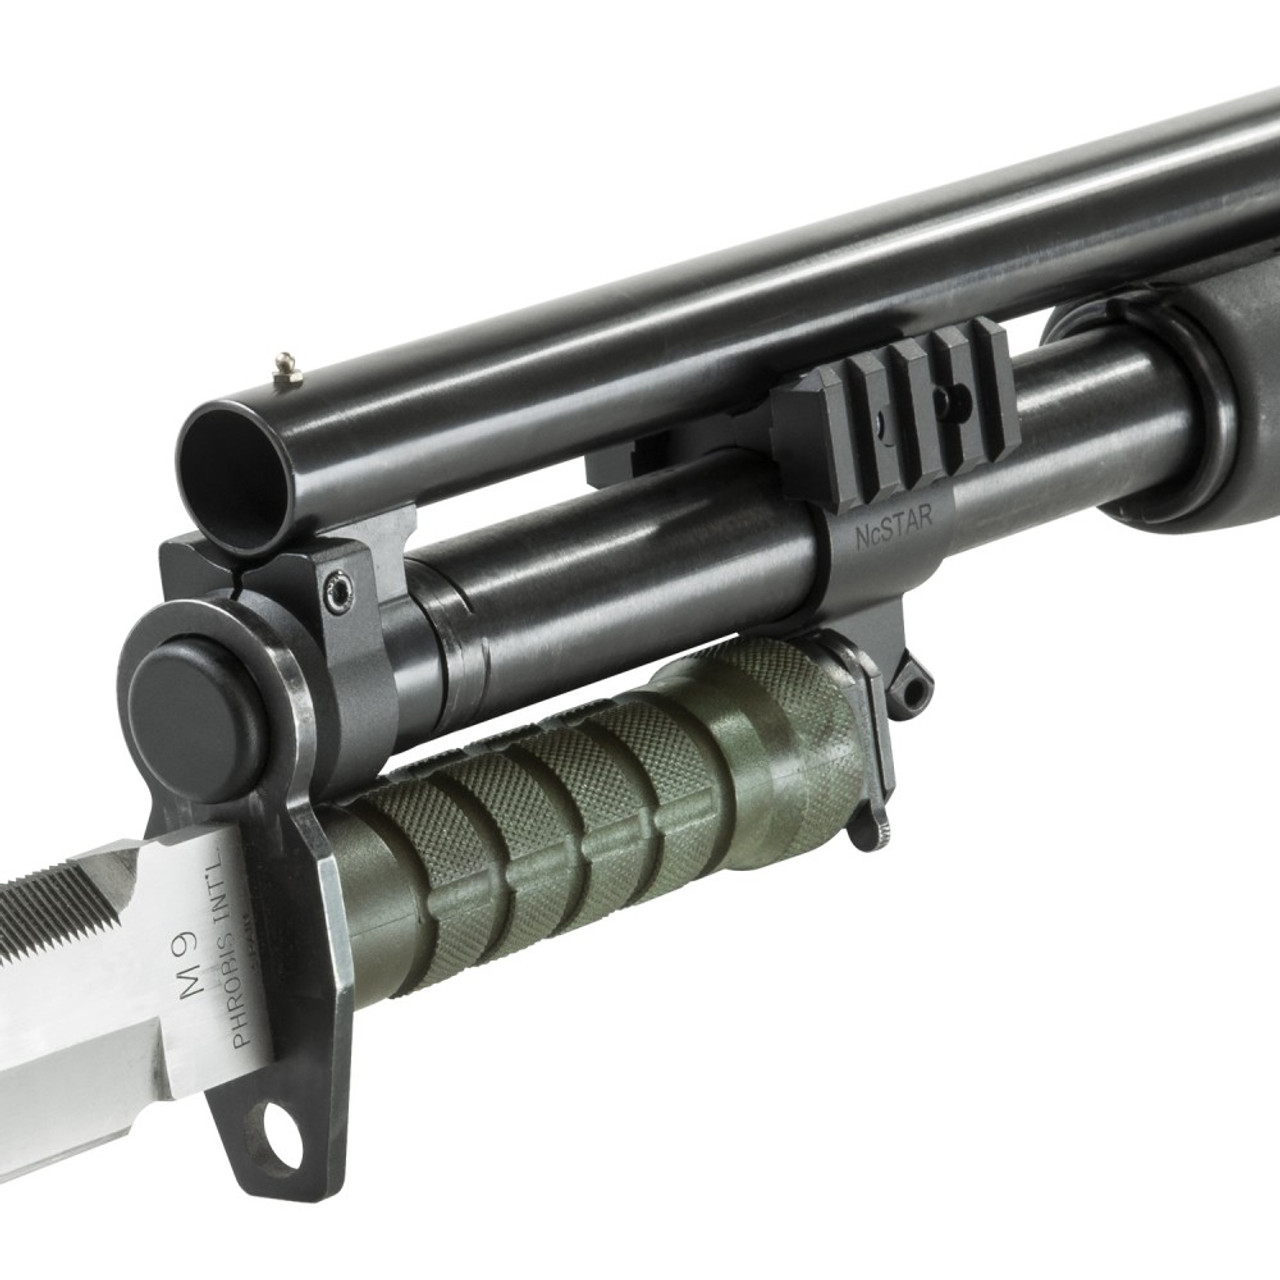 NcSTAR MSHBAYMOS Shotgun Rails & Bayonet Mount - Mossberg 500